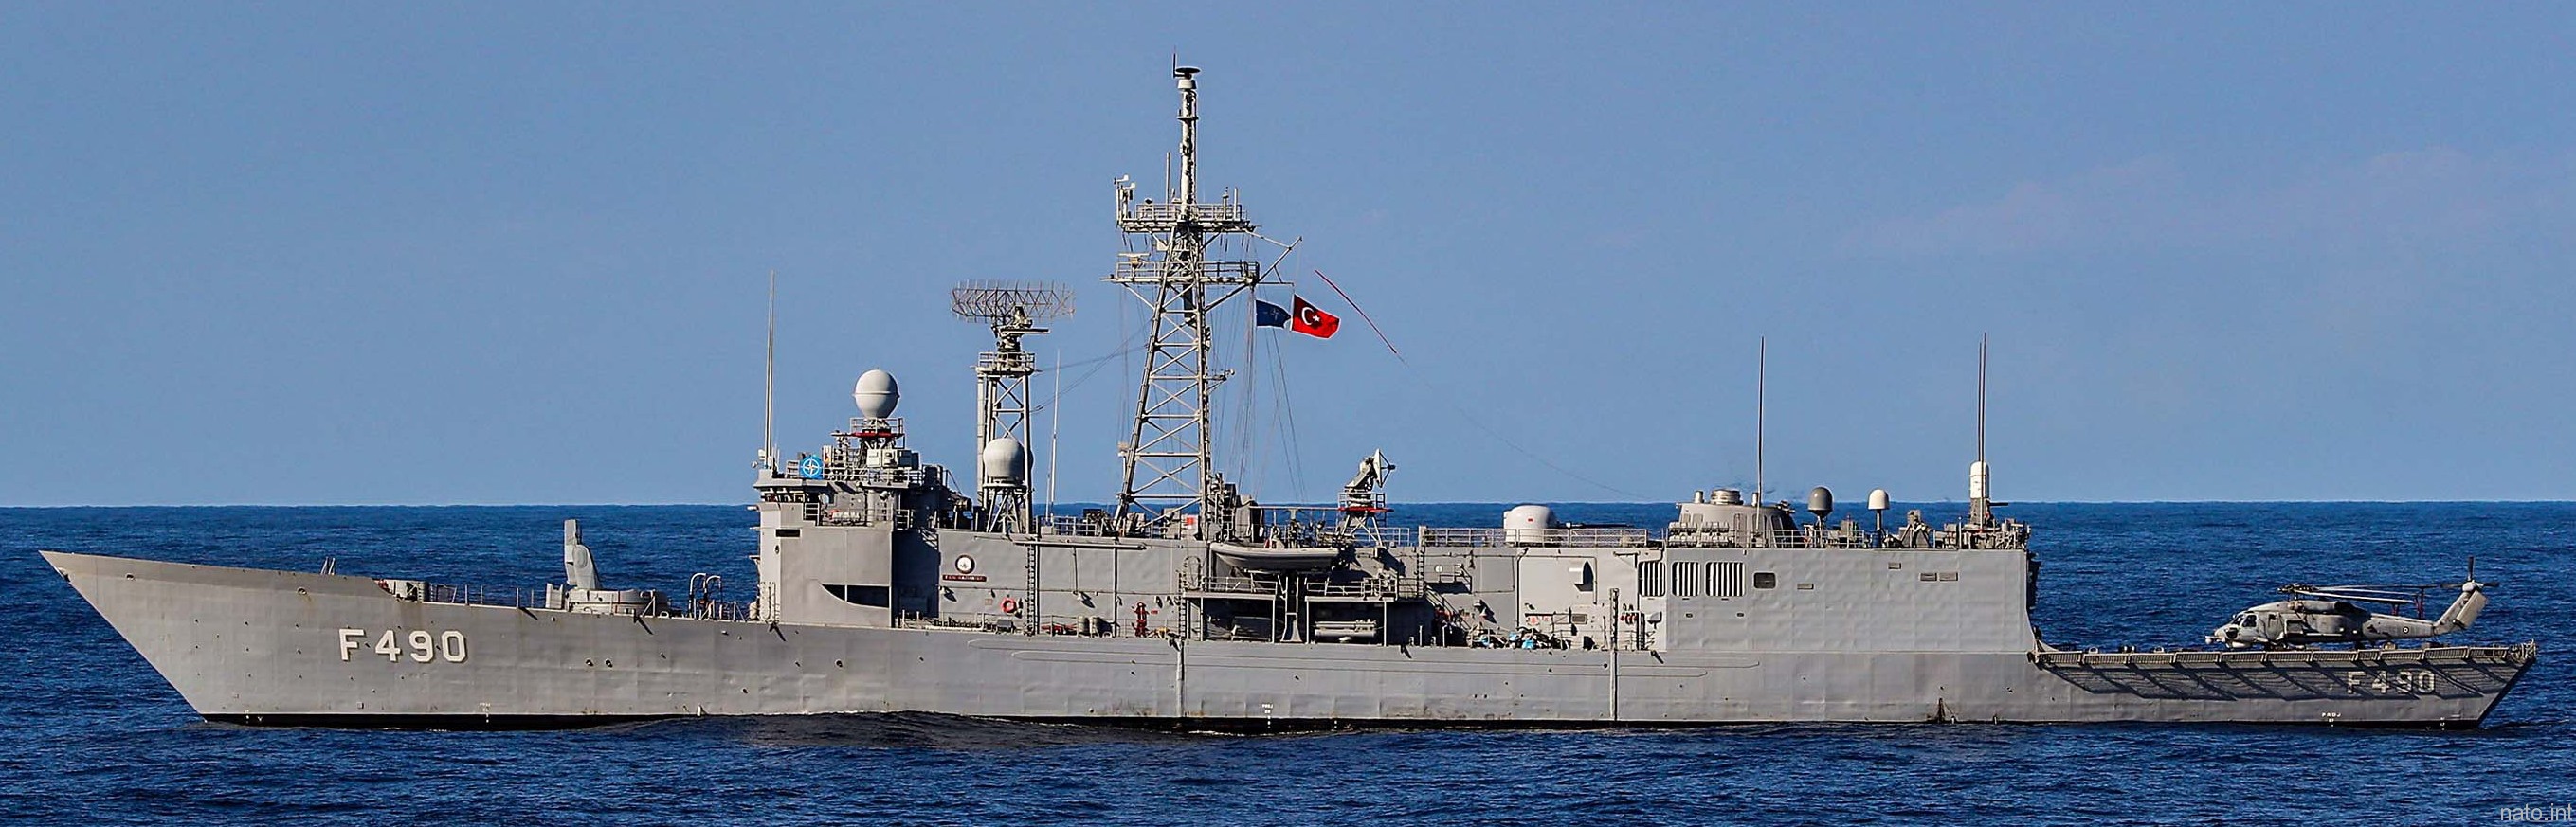 f-490 tcg gaziantep gabya g-class perry frigate ffg turkish navy türk deniz kuvvetleri 04